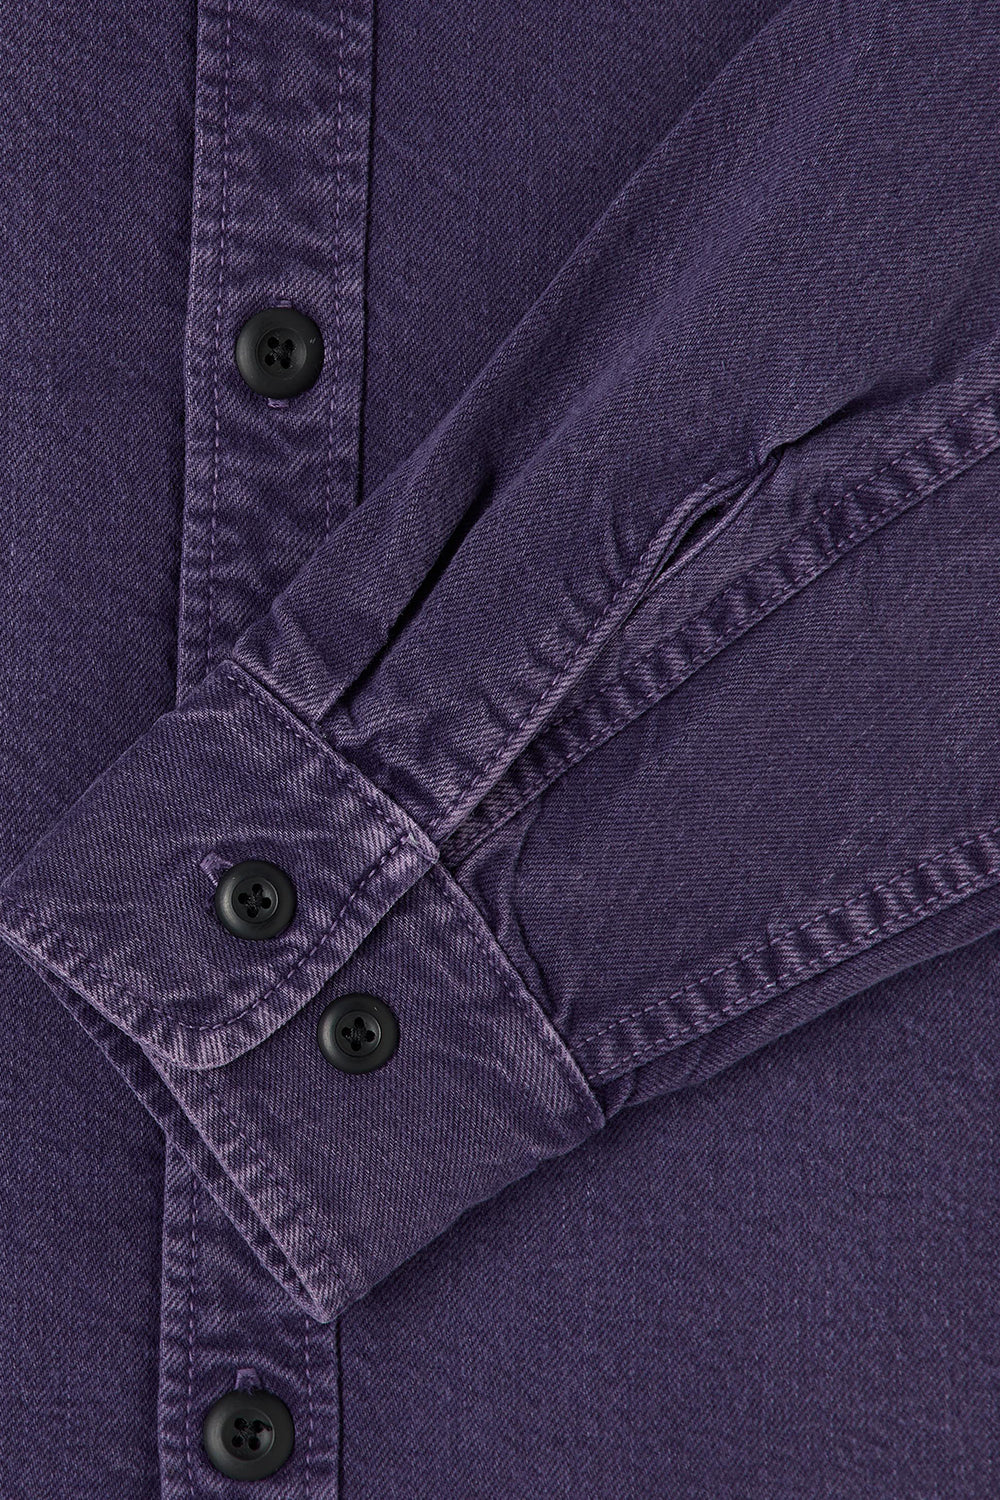 Edwin Sebastian PFD Spike Shirt (Denim Purple)